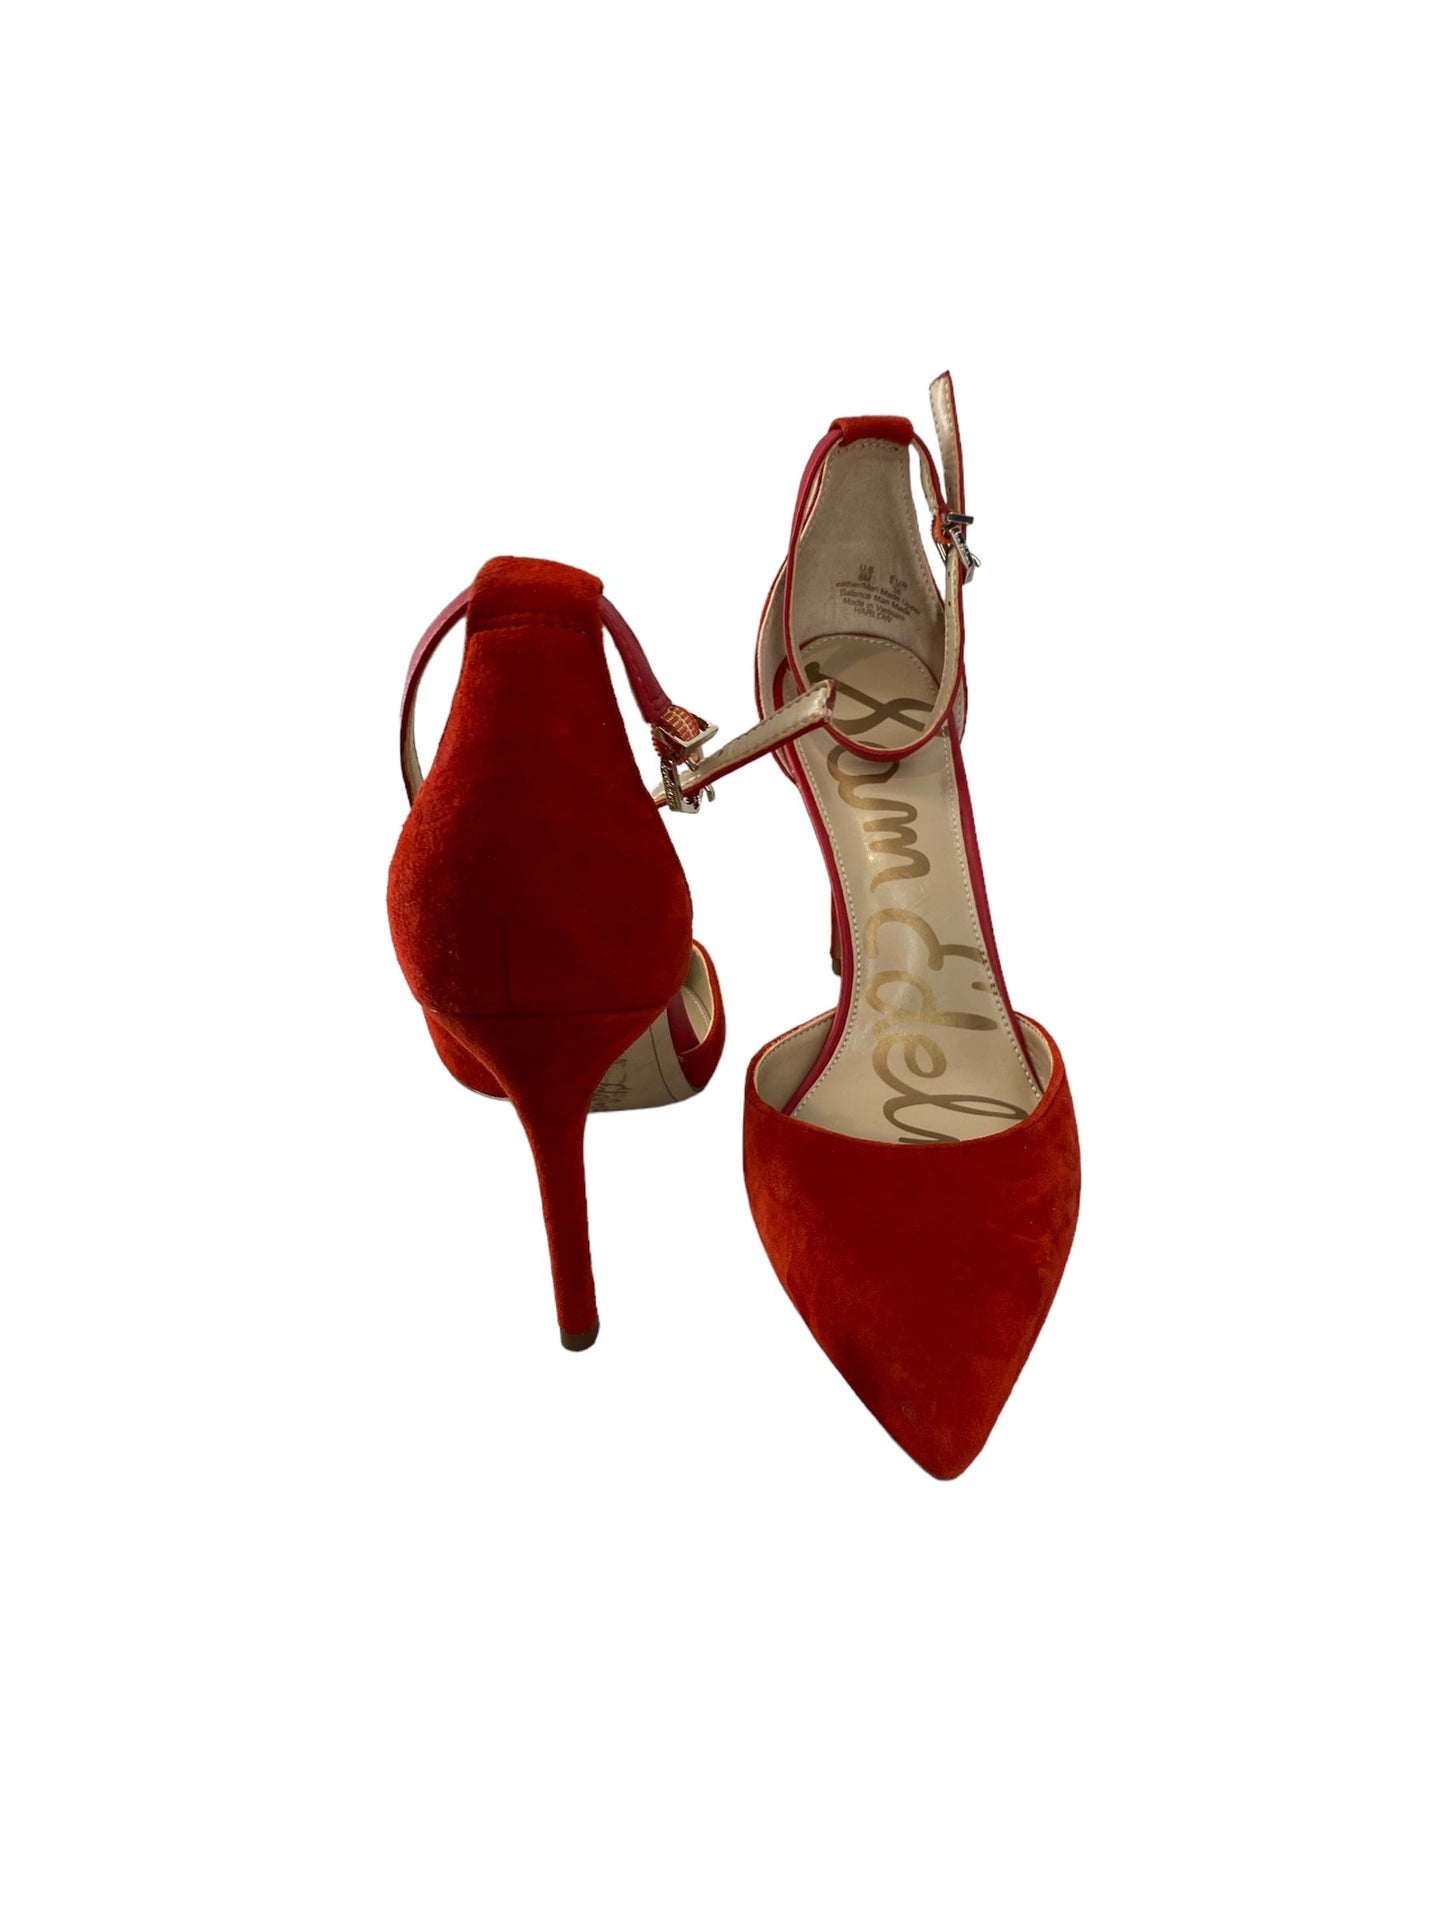 Shoes Heels Stiletto By Sam Edelman  Size: 8